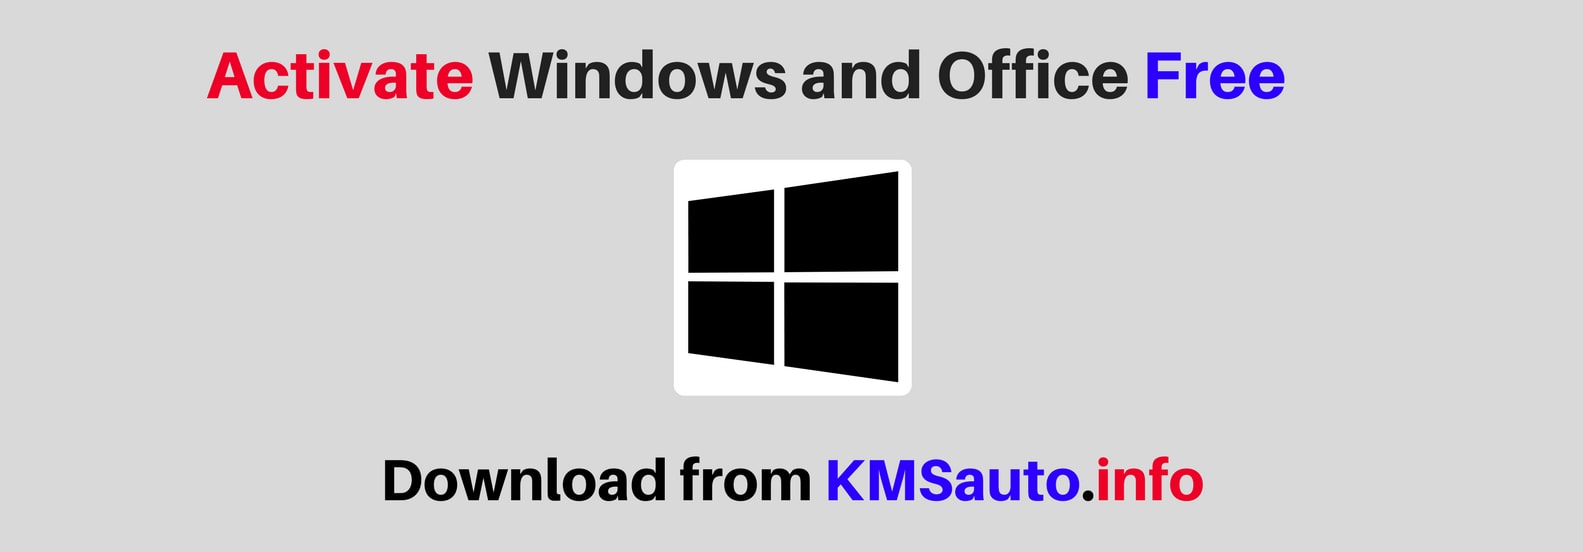 Windows KMS Activator Ultimate 2017 3.8 [CracksNow] Download Pc